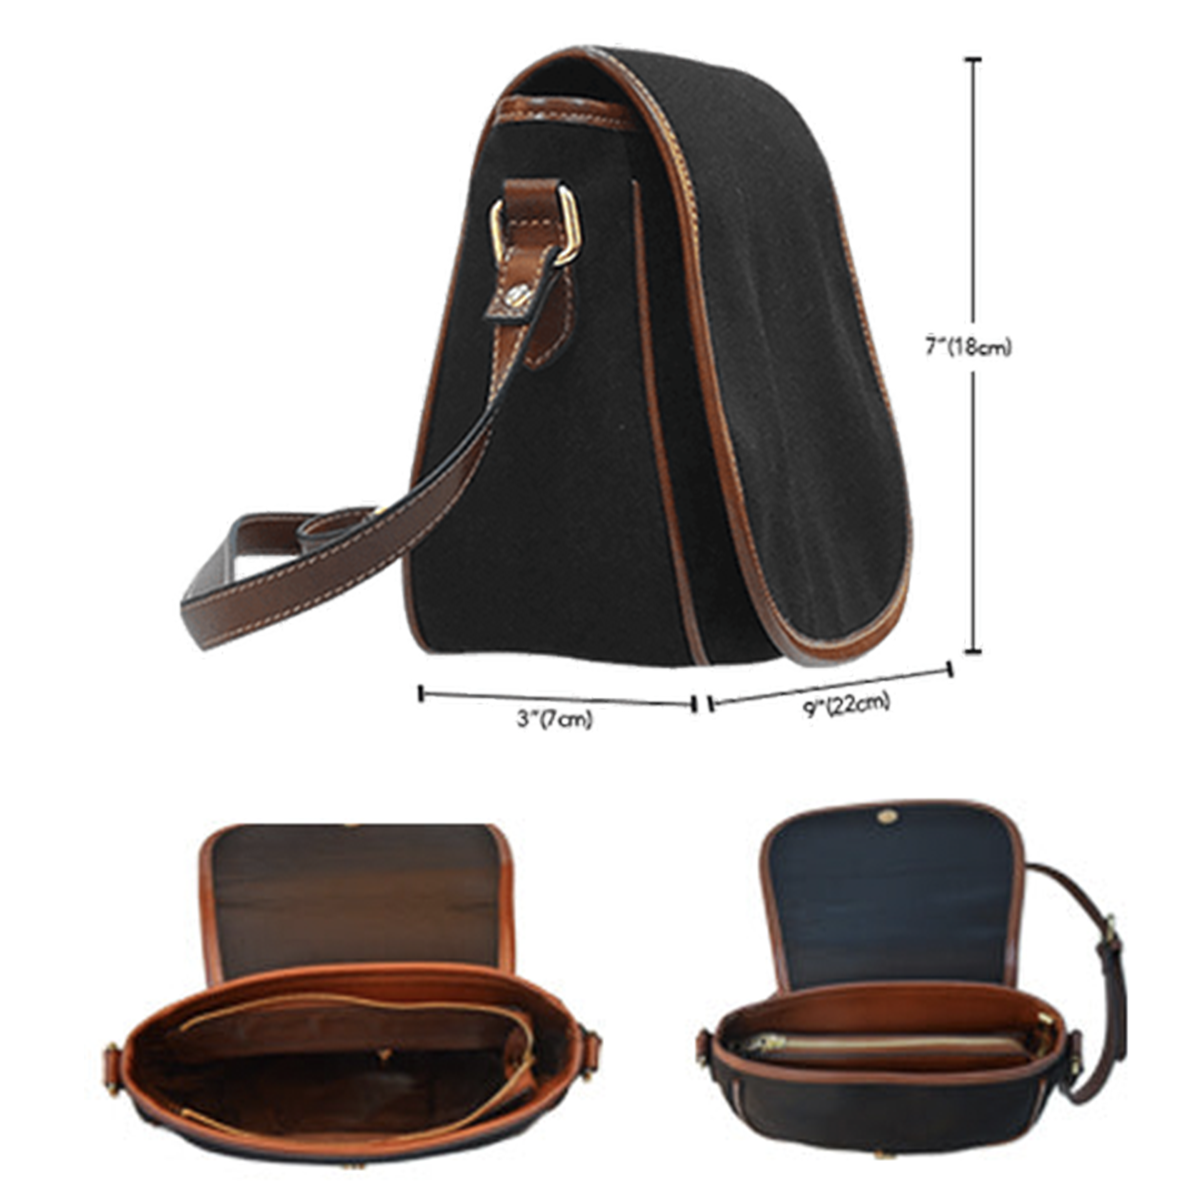 Bryson Tartan Saddle Handbags